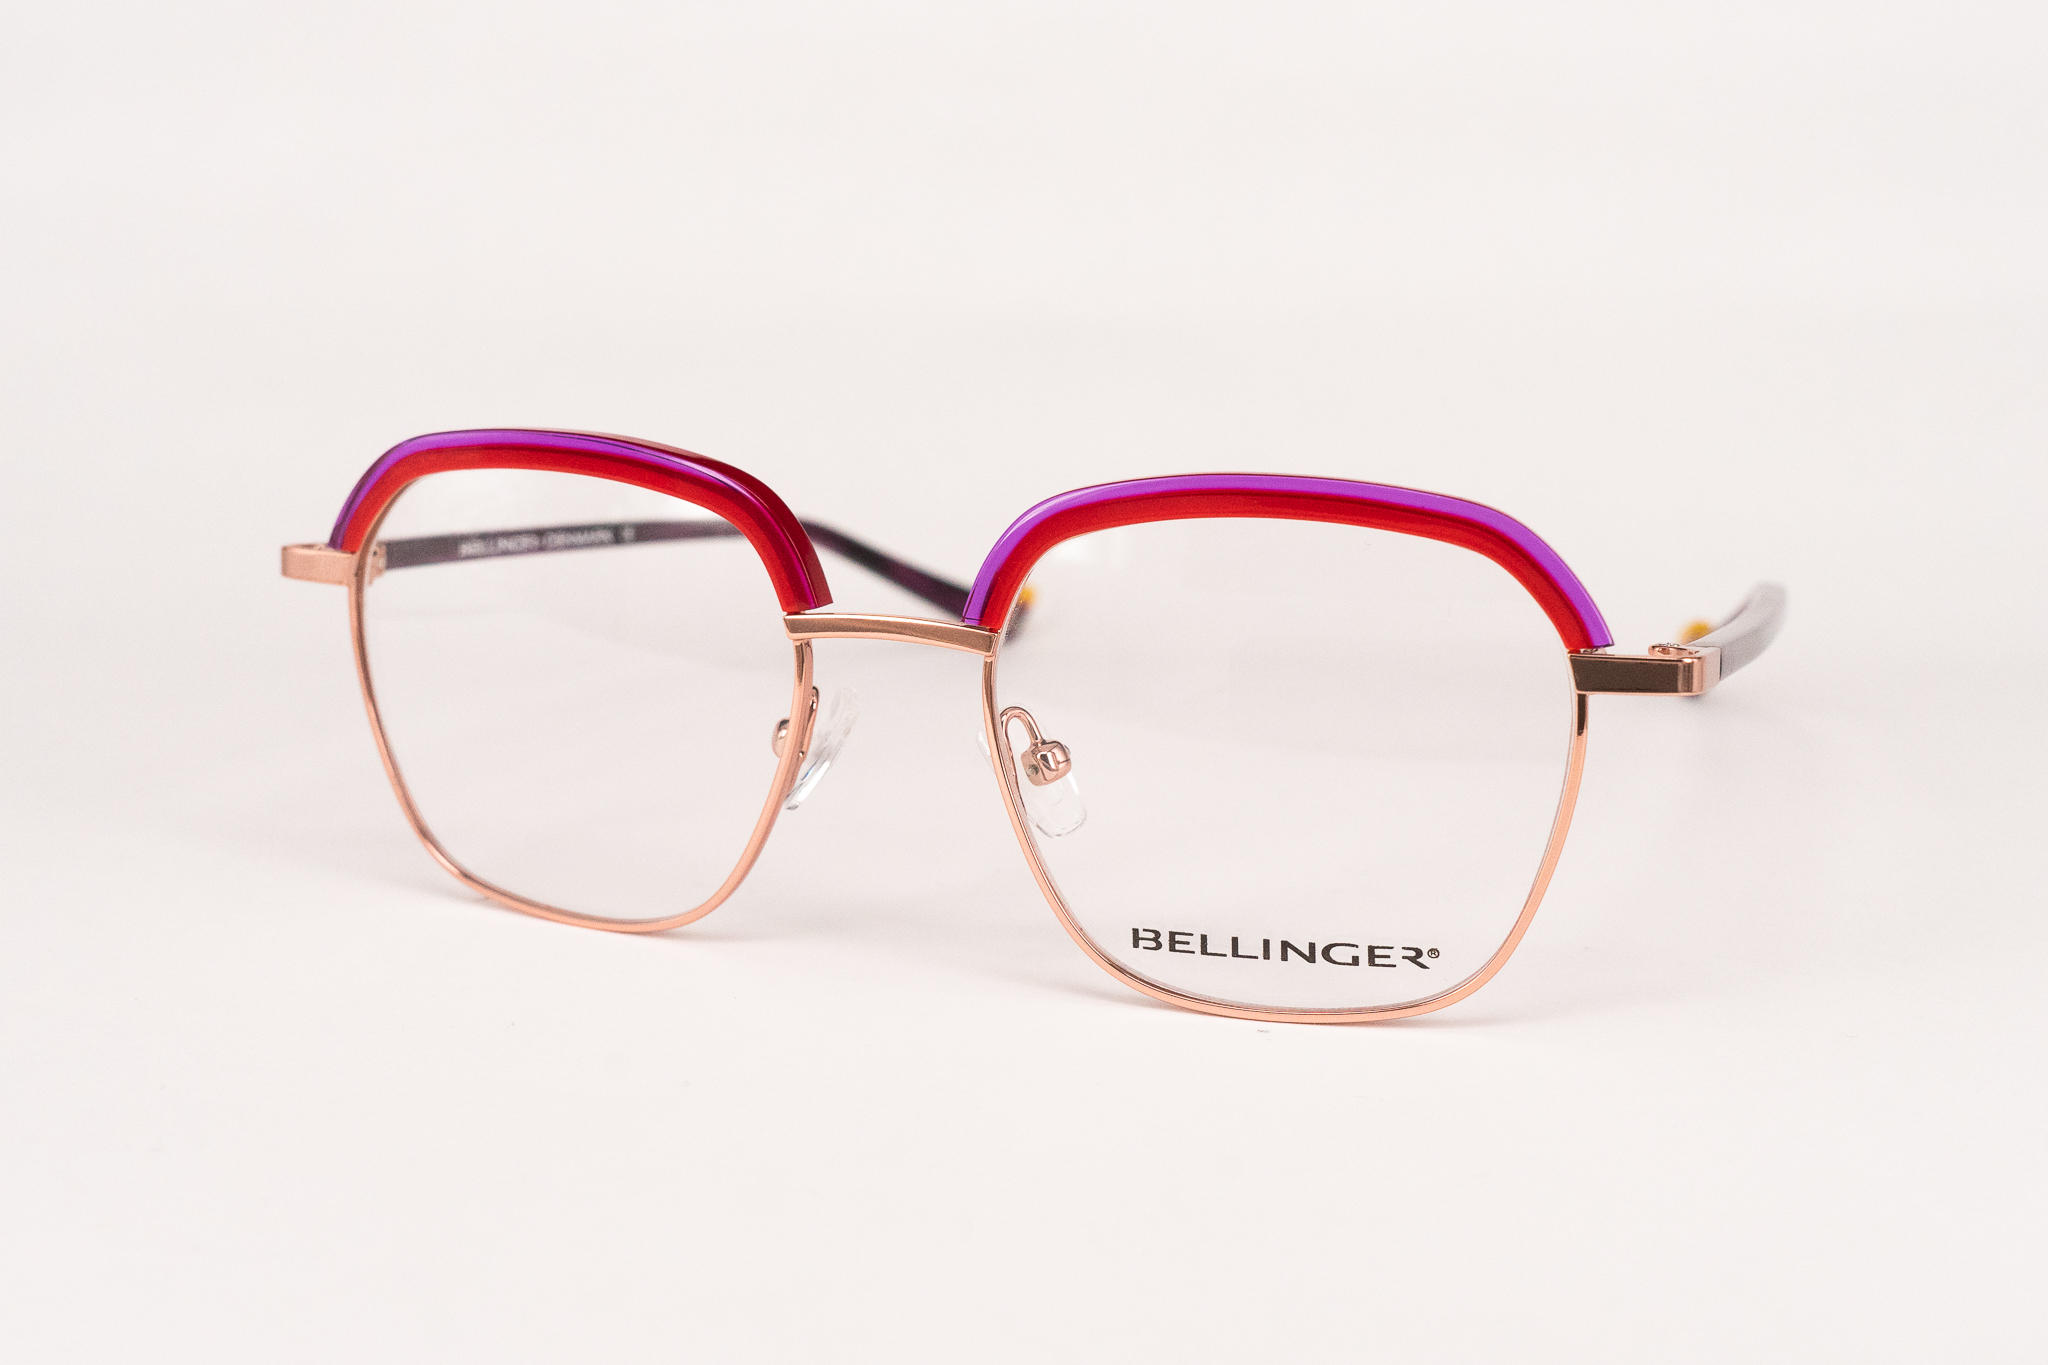 Blac / Bellinger, Marke, Brille, Brillenfassung